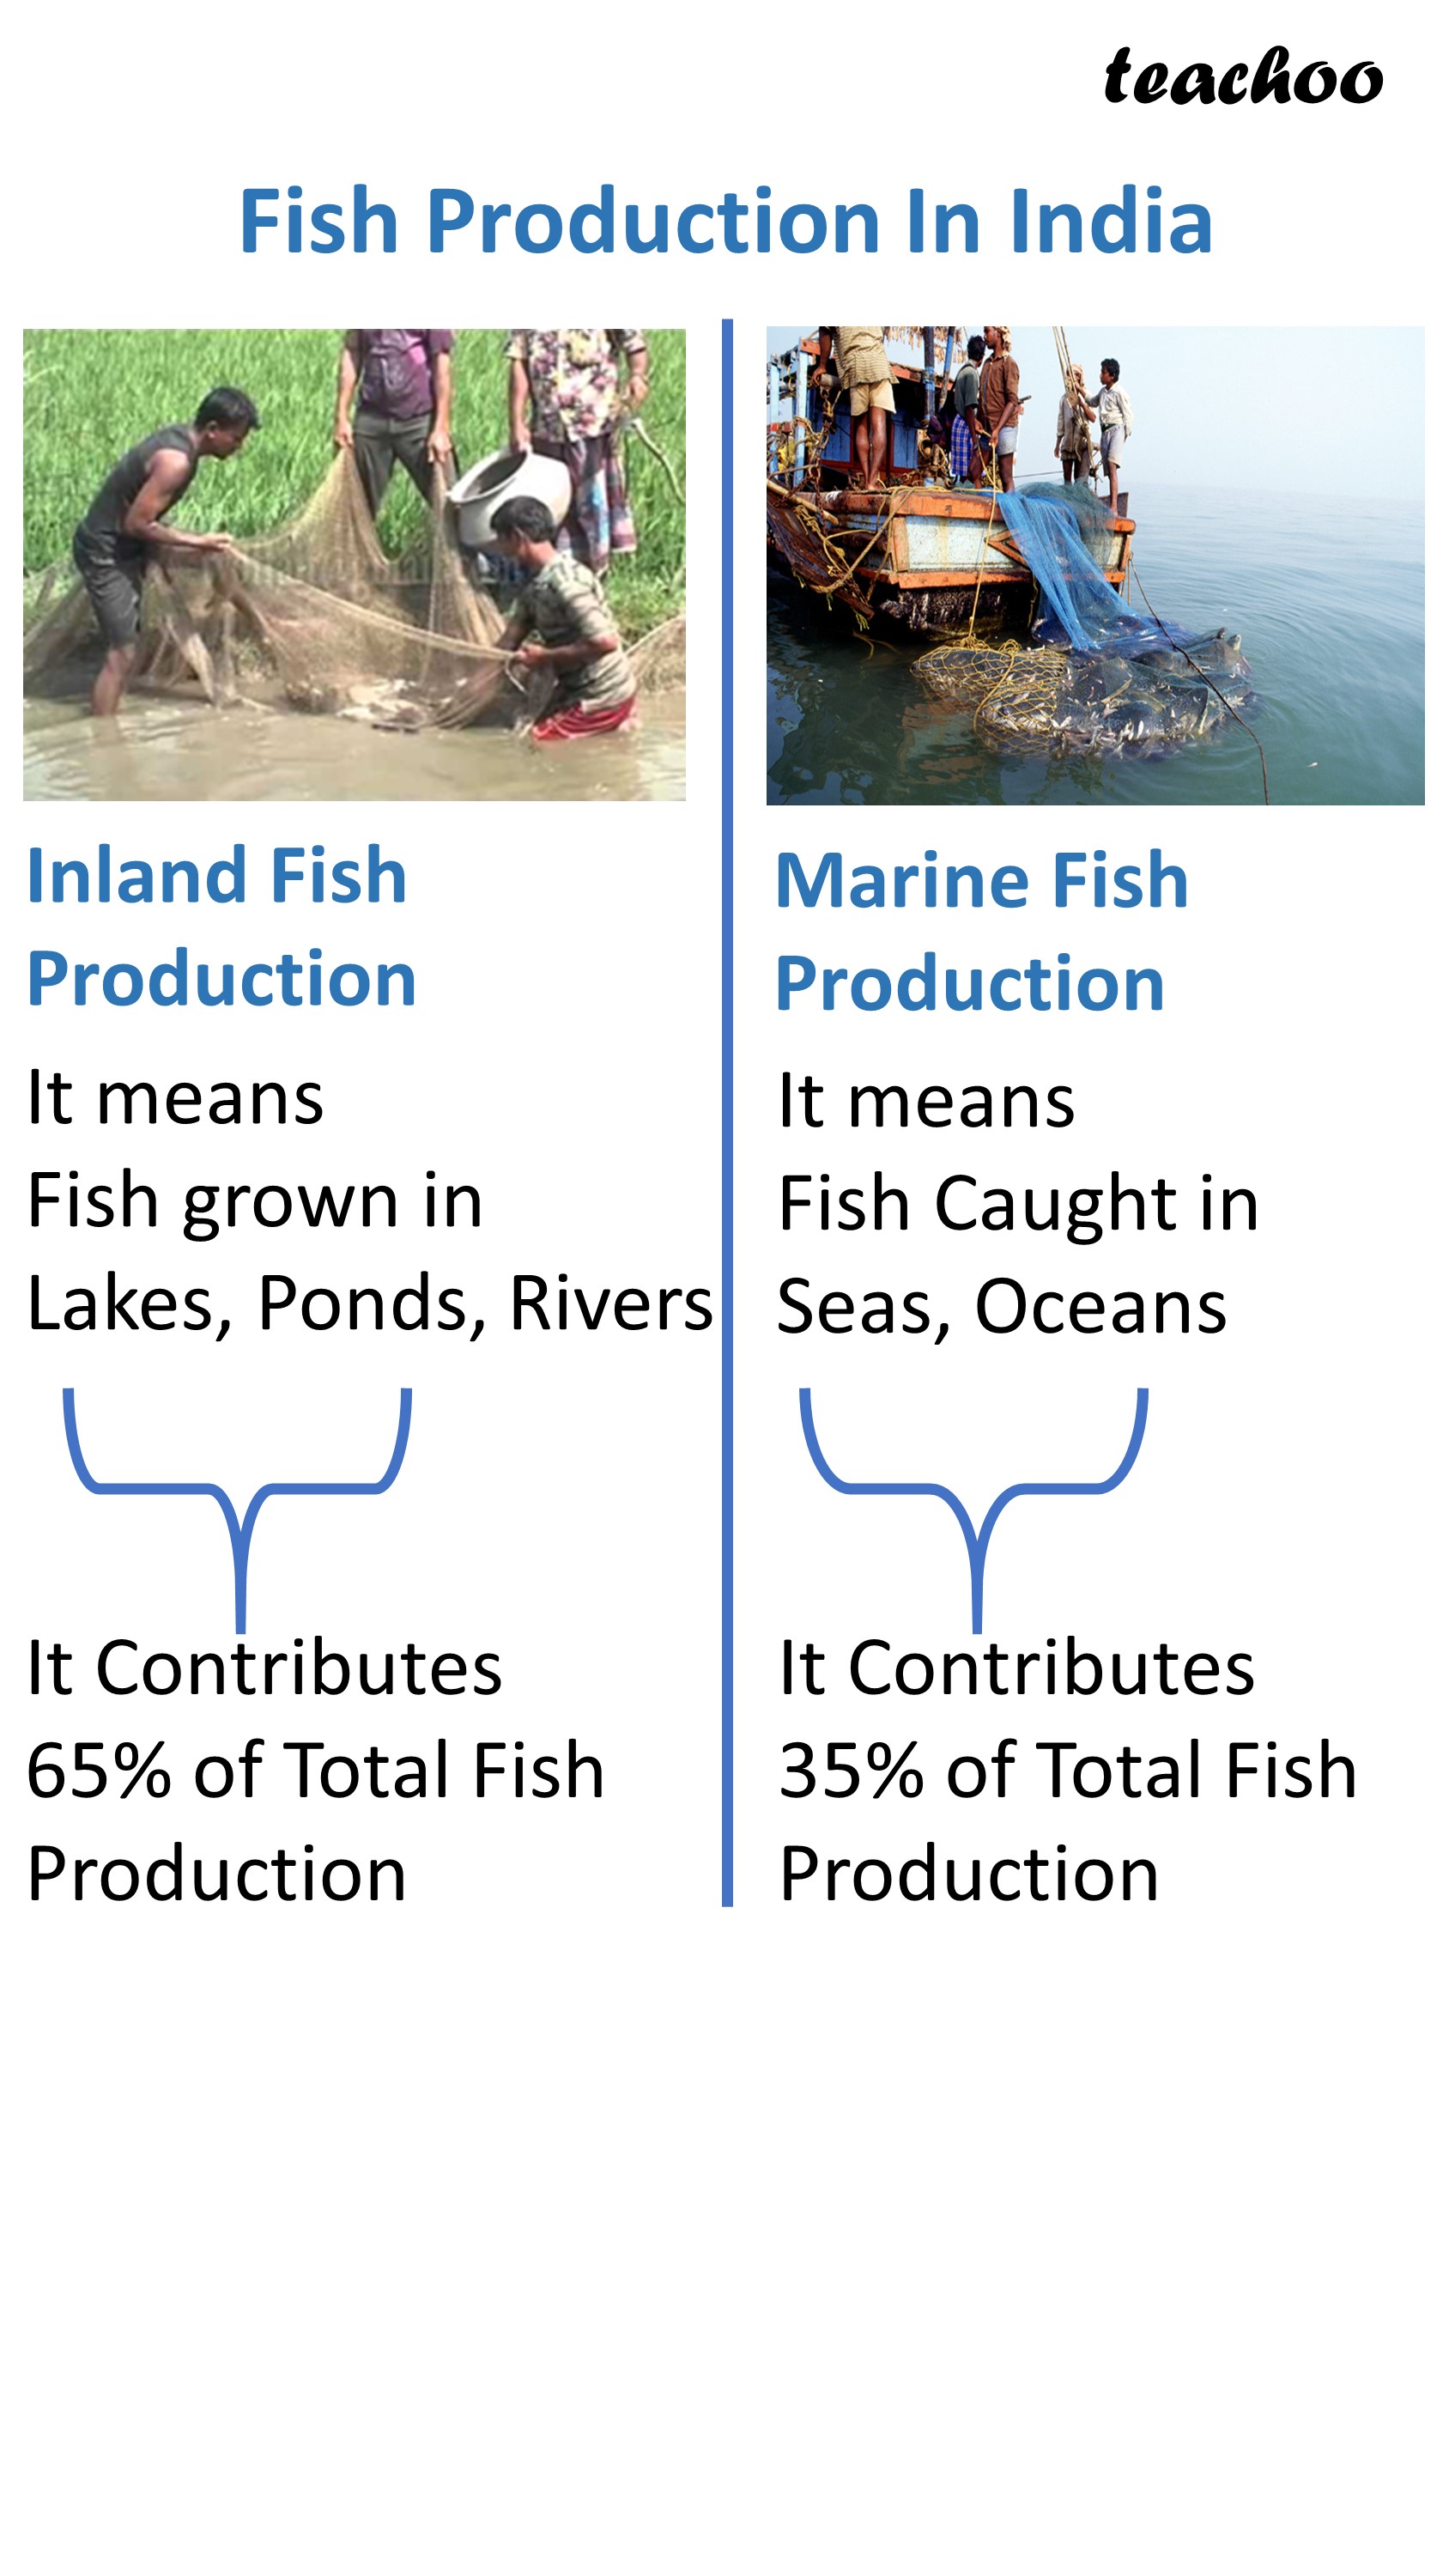 Share of inland and Marine Fish Production in india - Teachoo.JPG